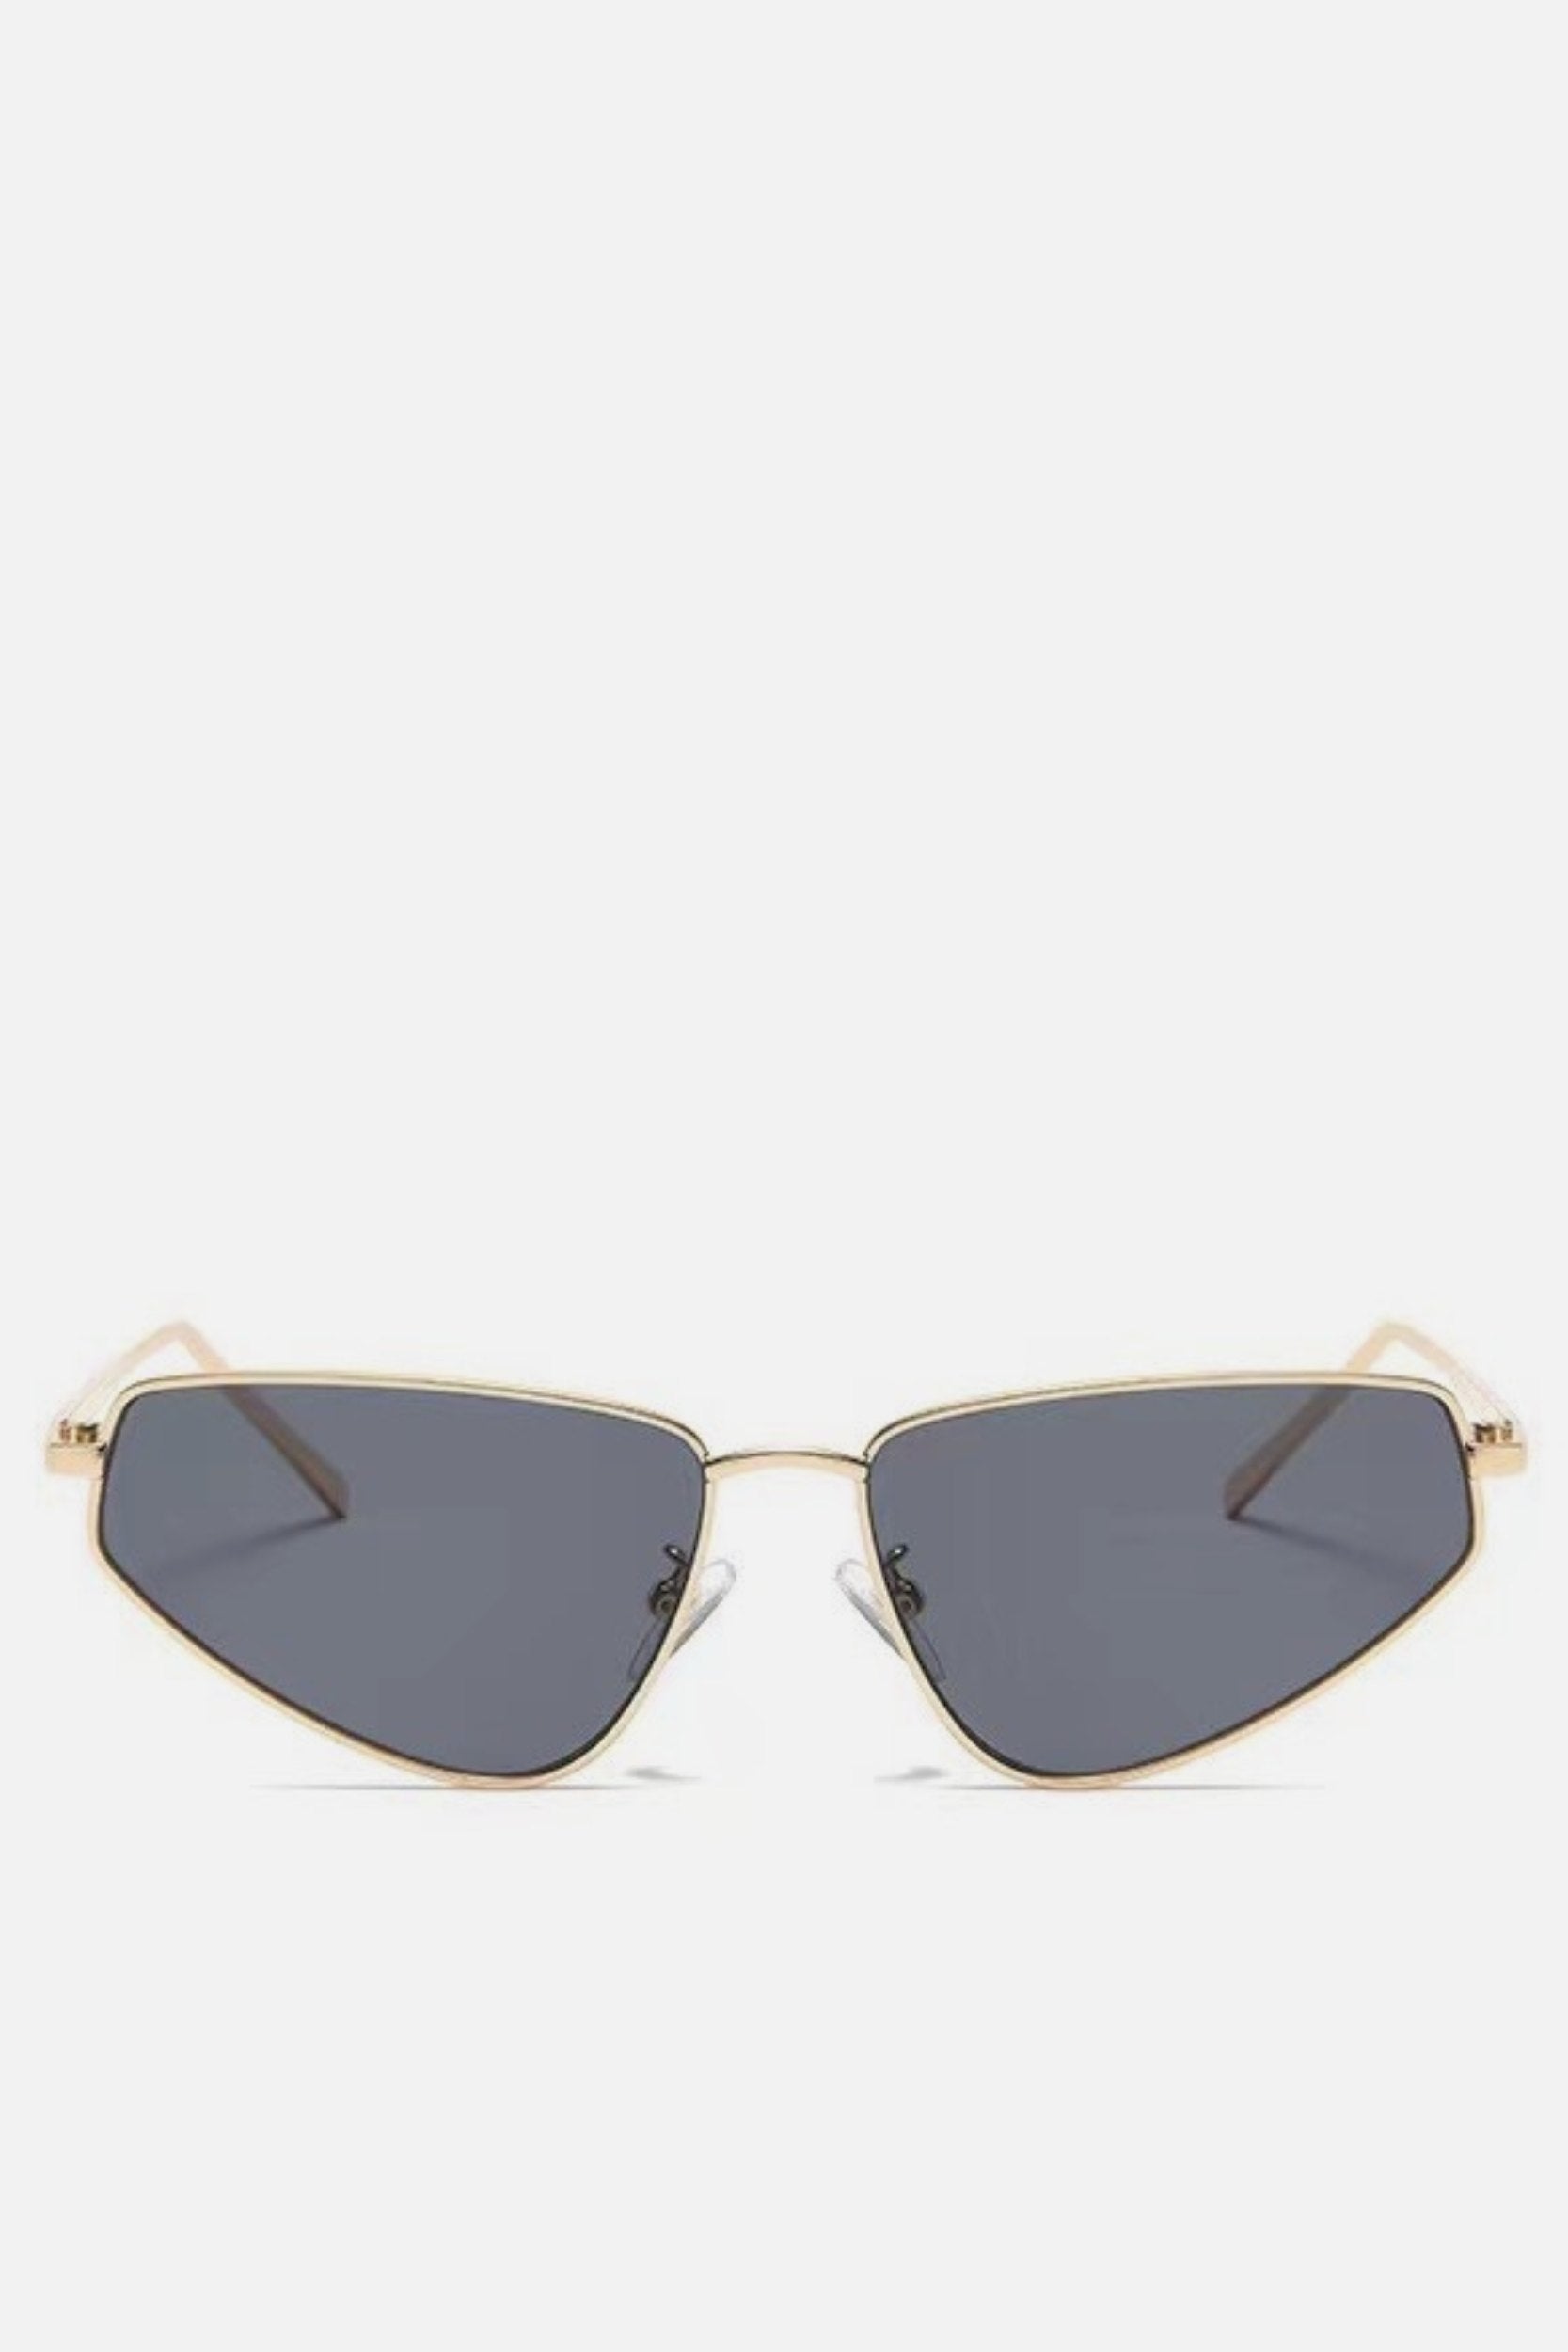 BORDEAUX Black & Gold Cat Eye Sunglasses